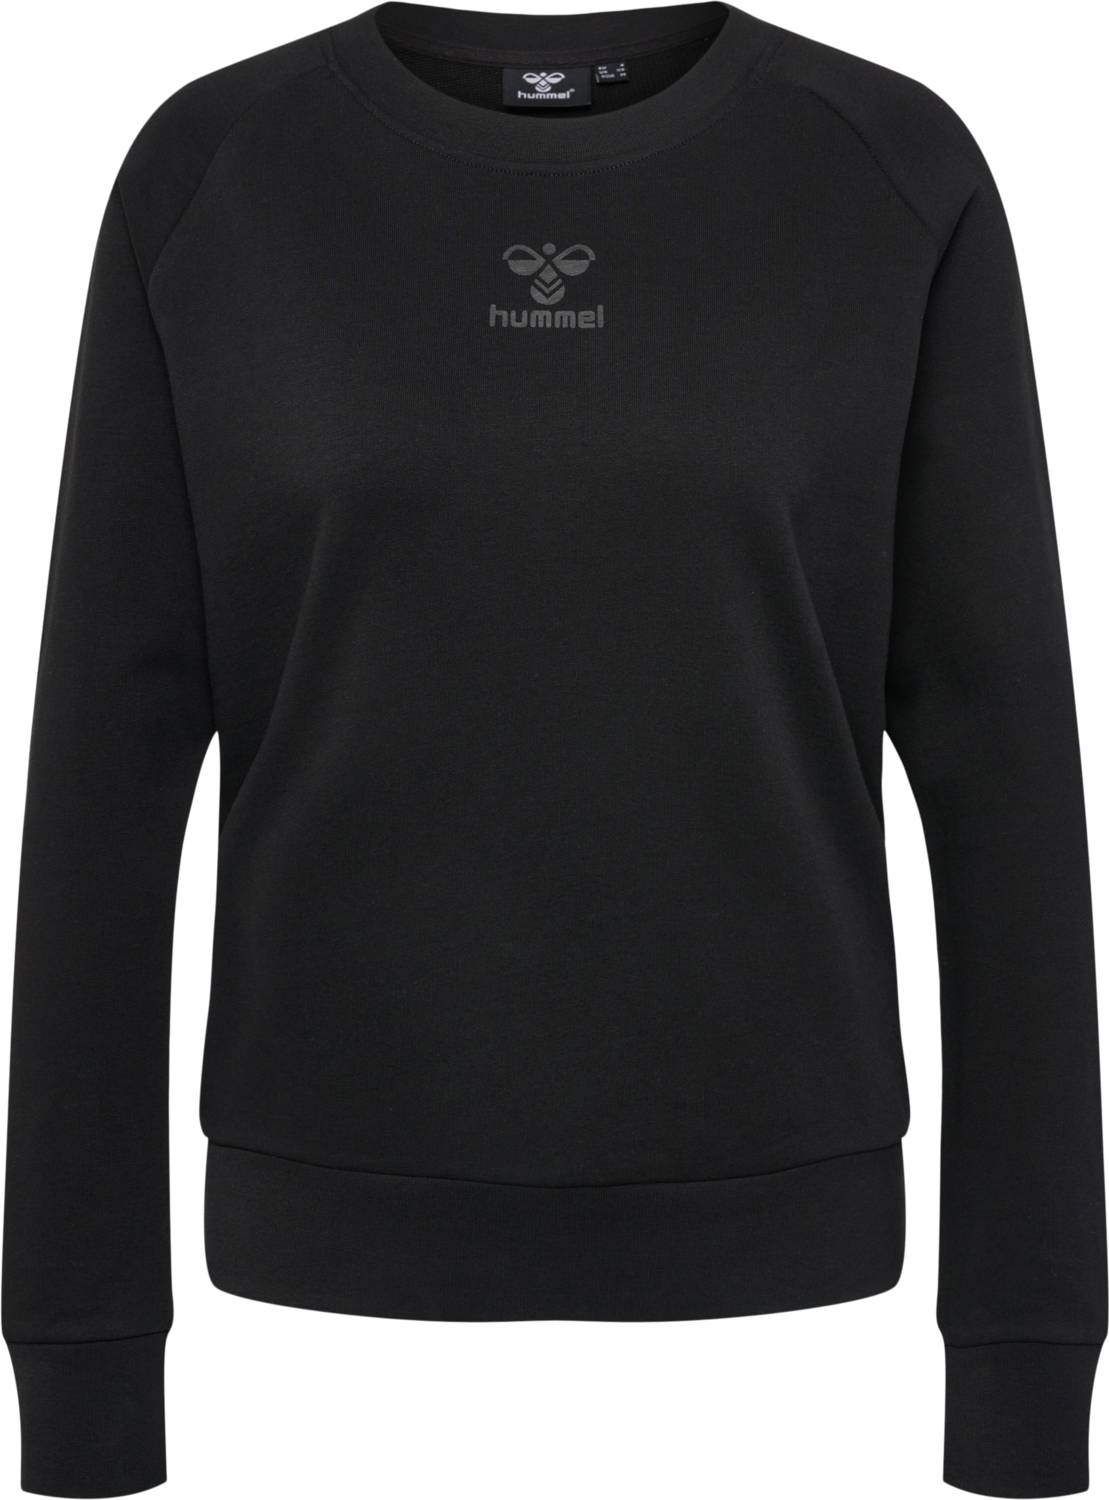 Hummel Women’s hmlICONS Sweatshirt Black